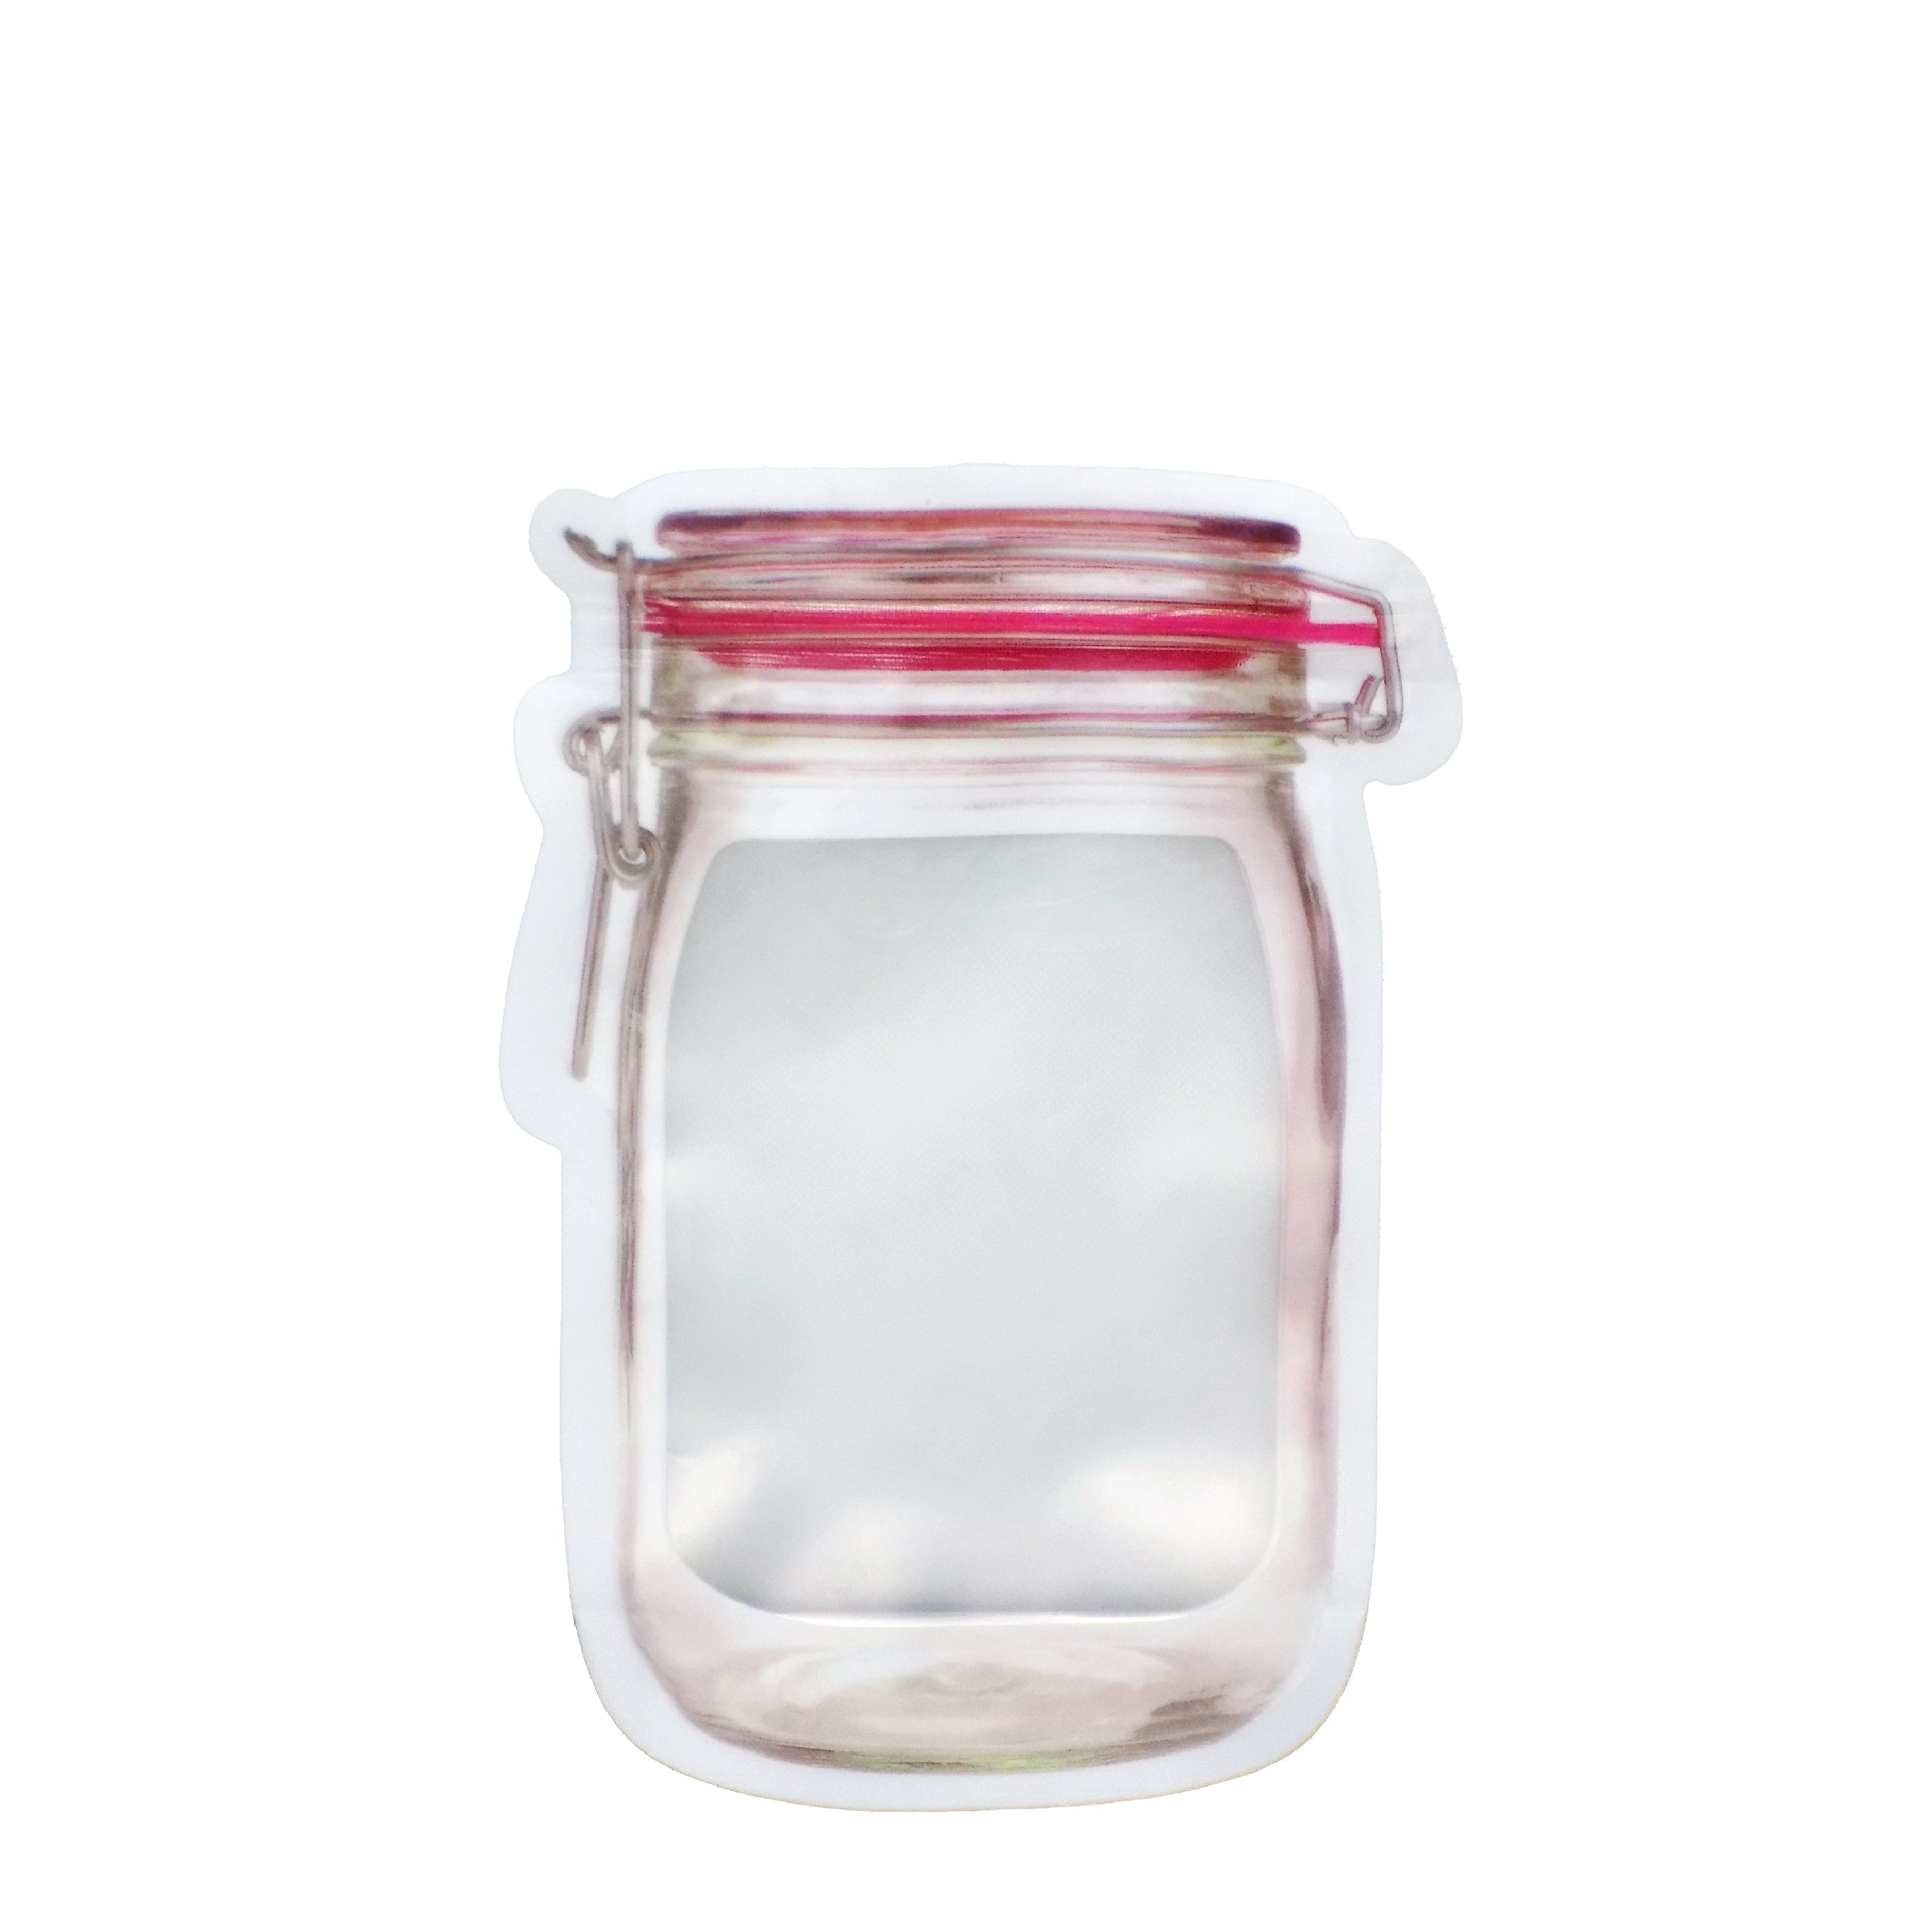 1074 Reusable Airtight Seal Plastic Food Storage Mason Jar Zipper (500ml) DeoDap